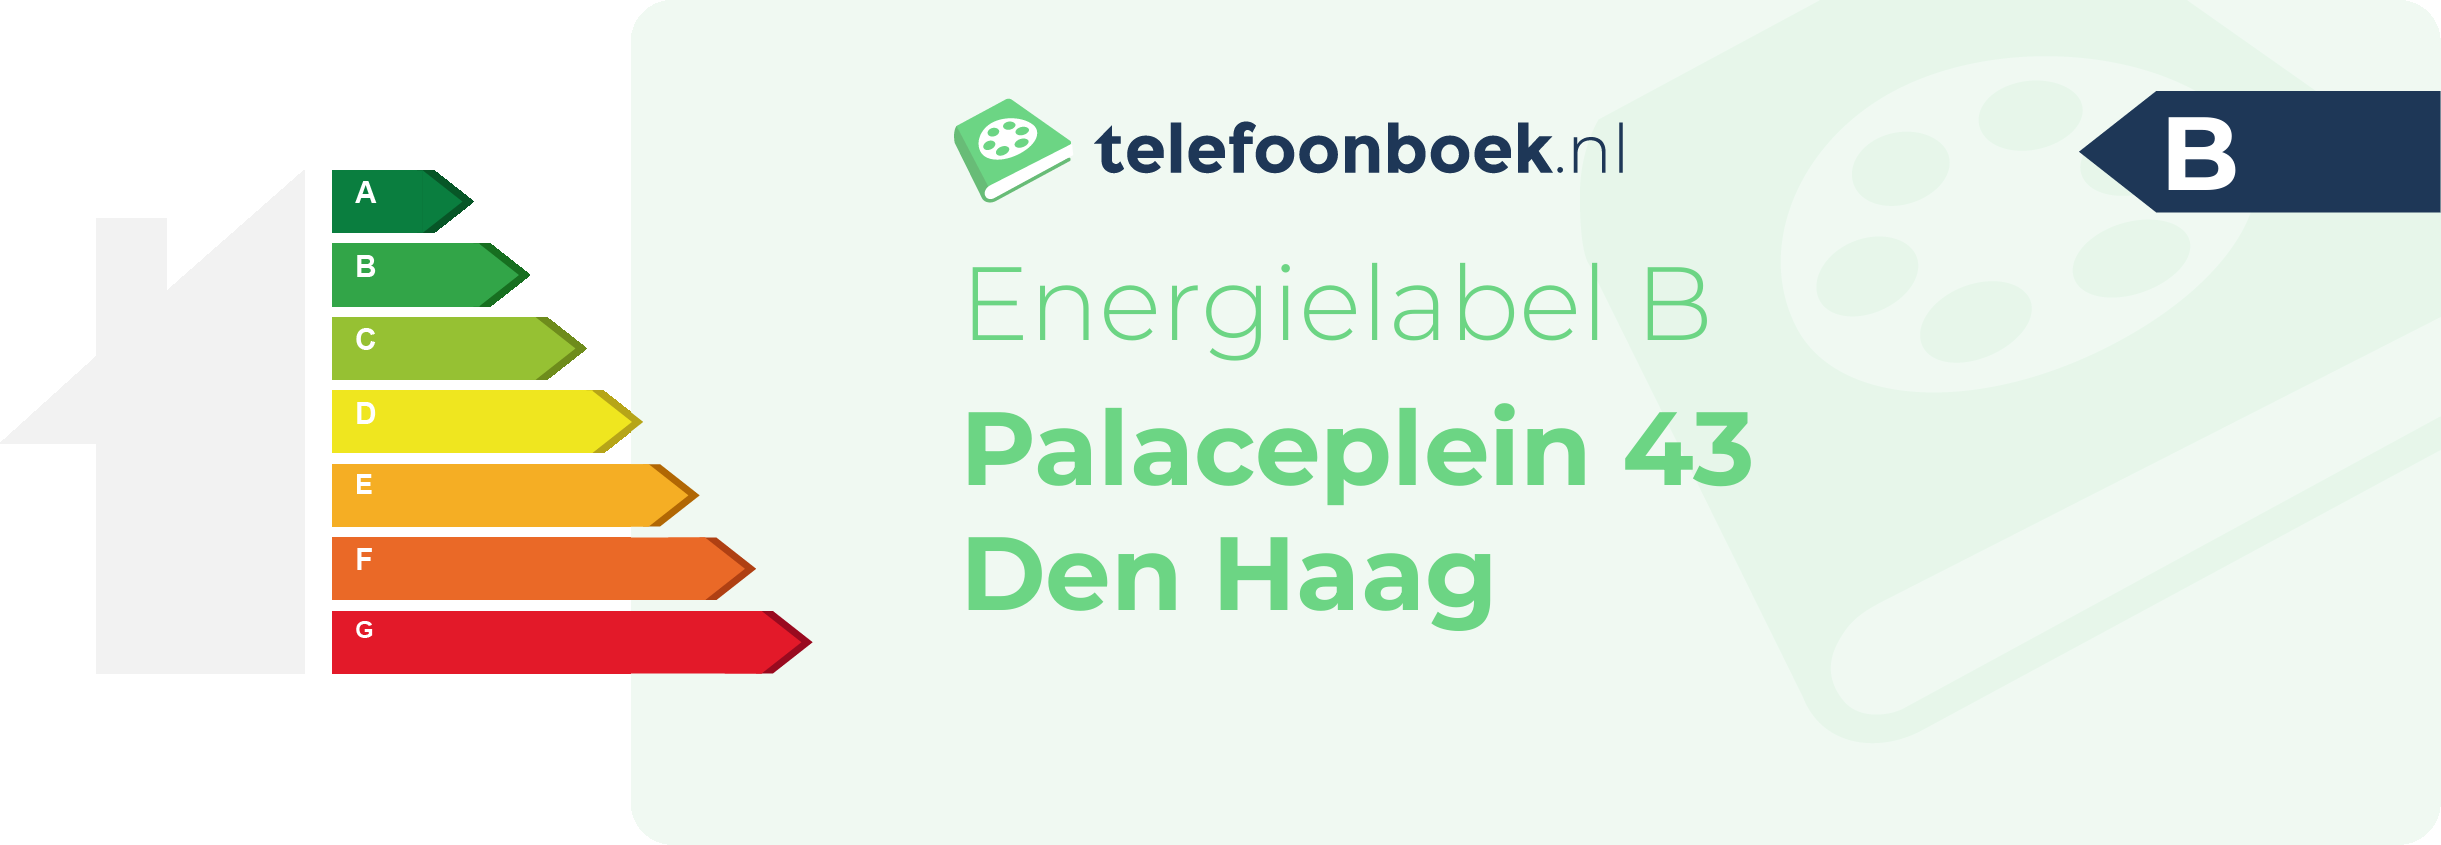 Energielabel Palaceplein 43 Den Haag